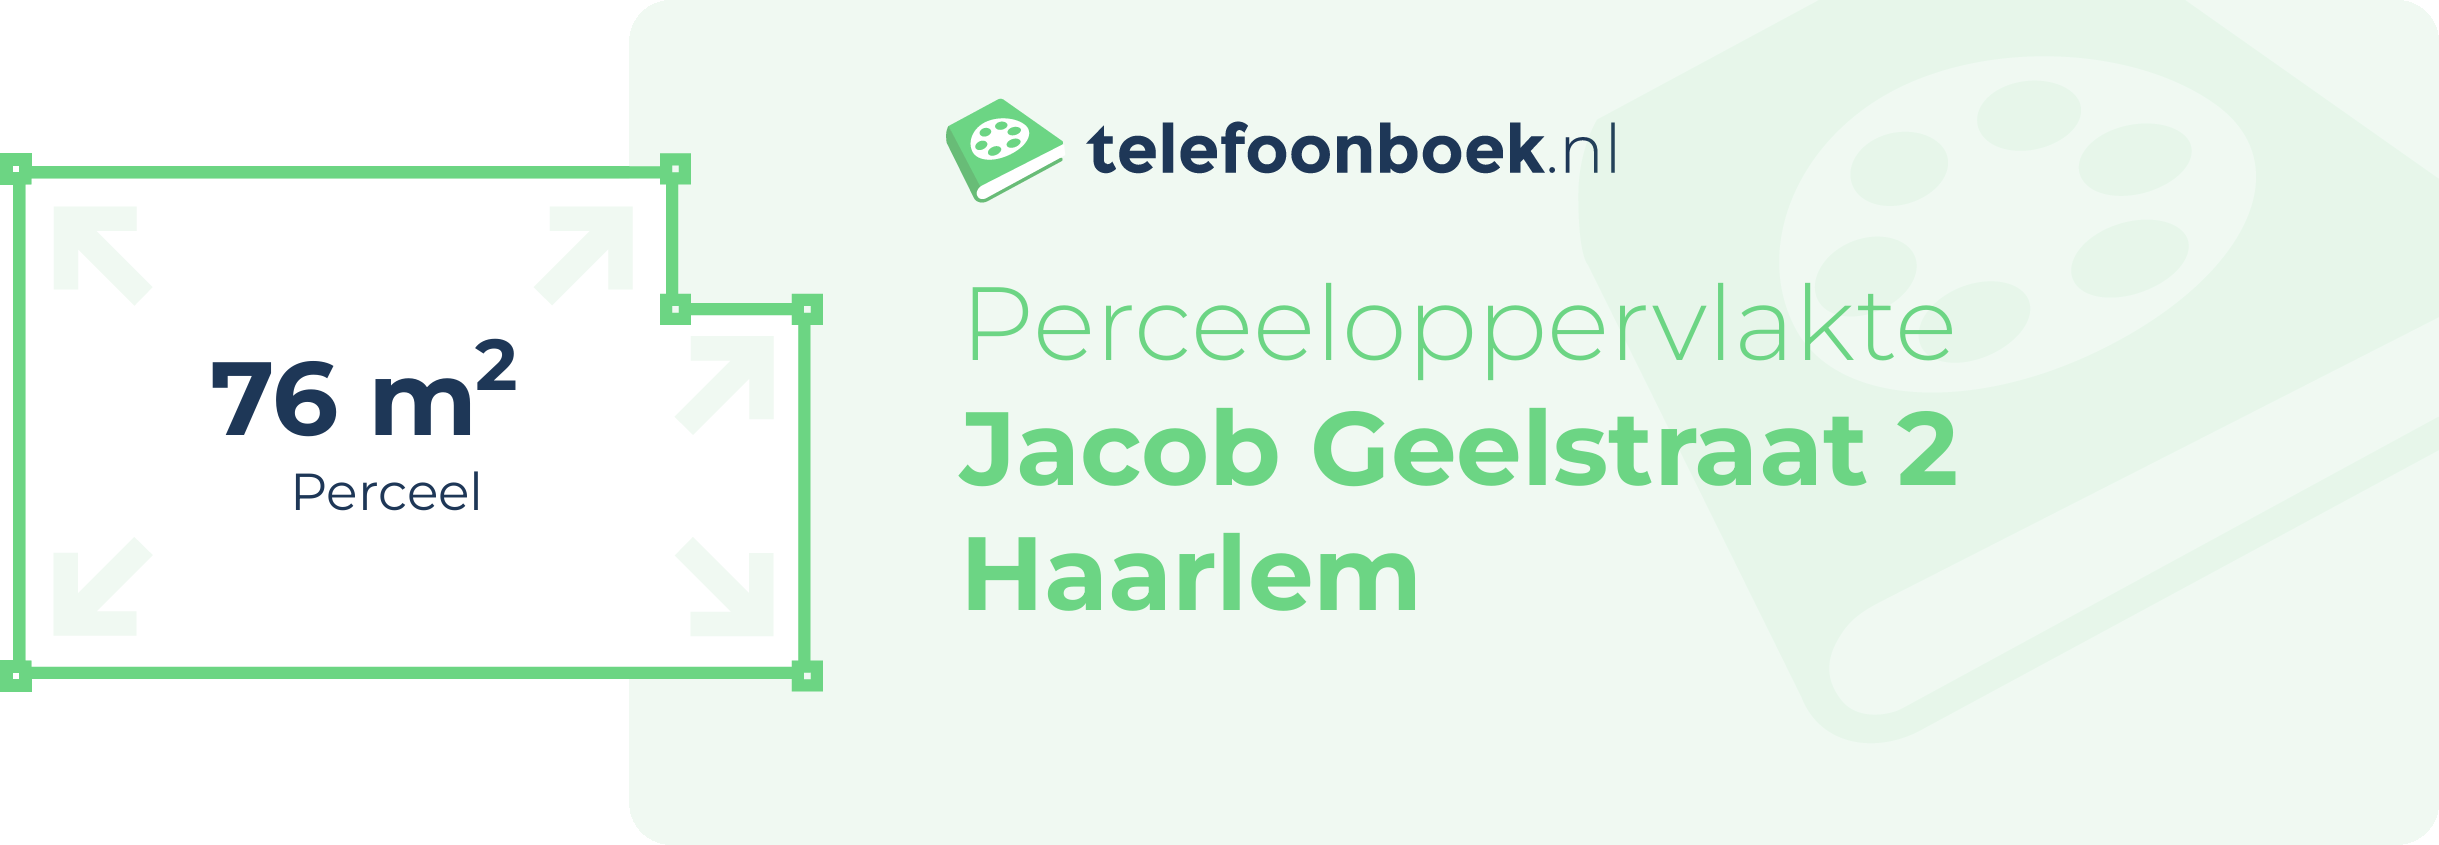 Perceeloppervlakte Jacob Geelstraat 2 Haarlem